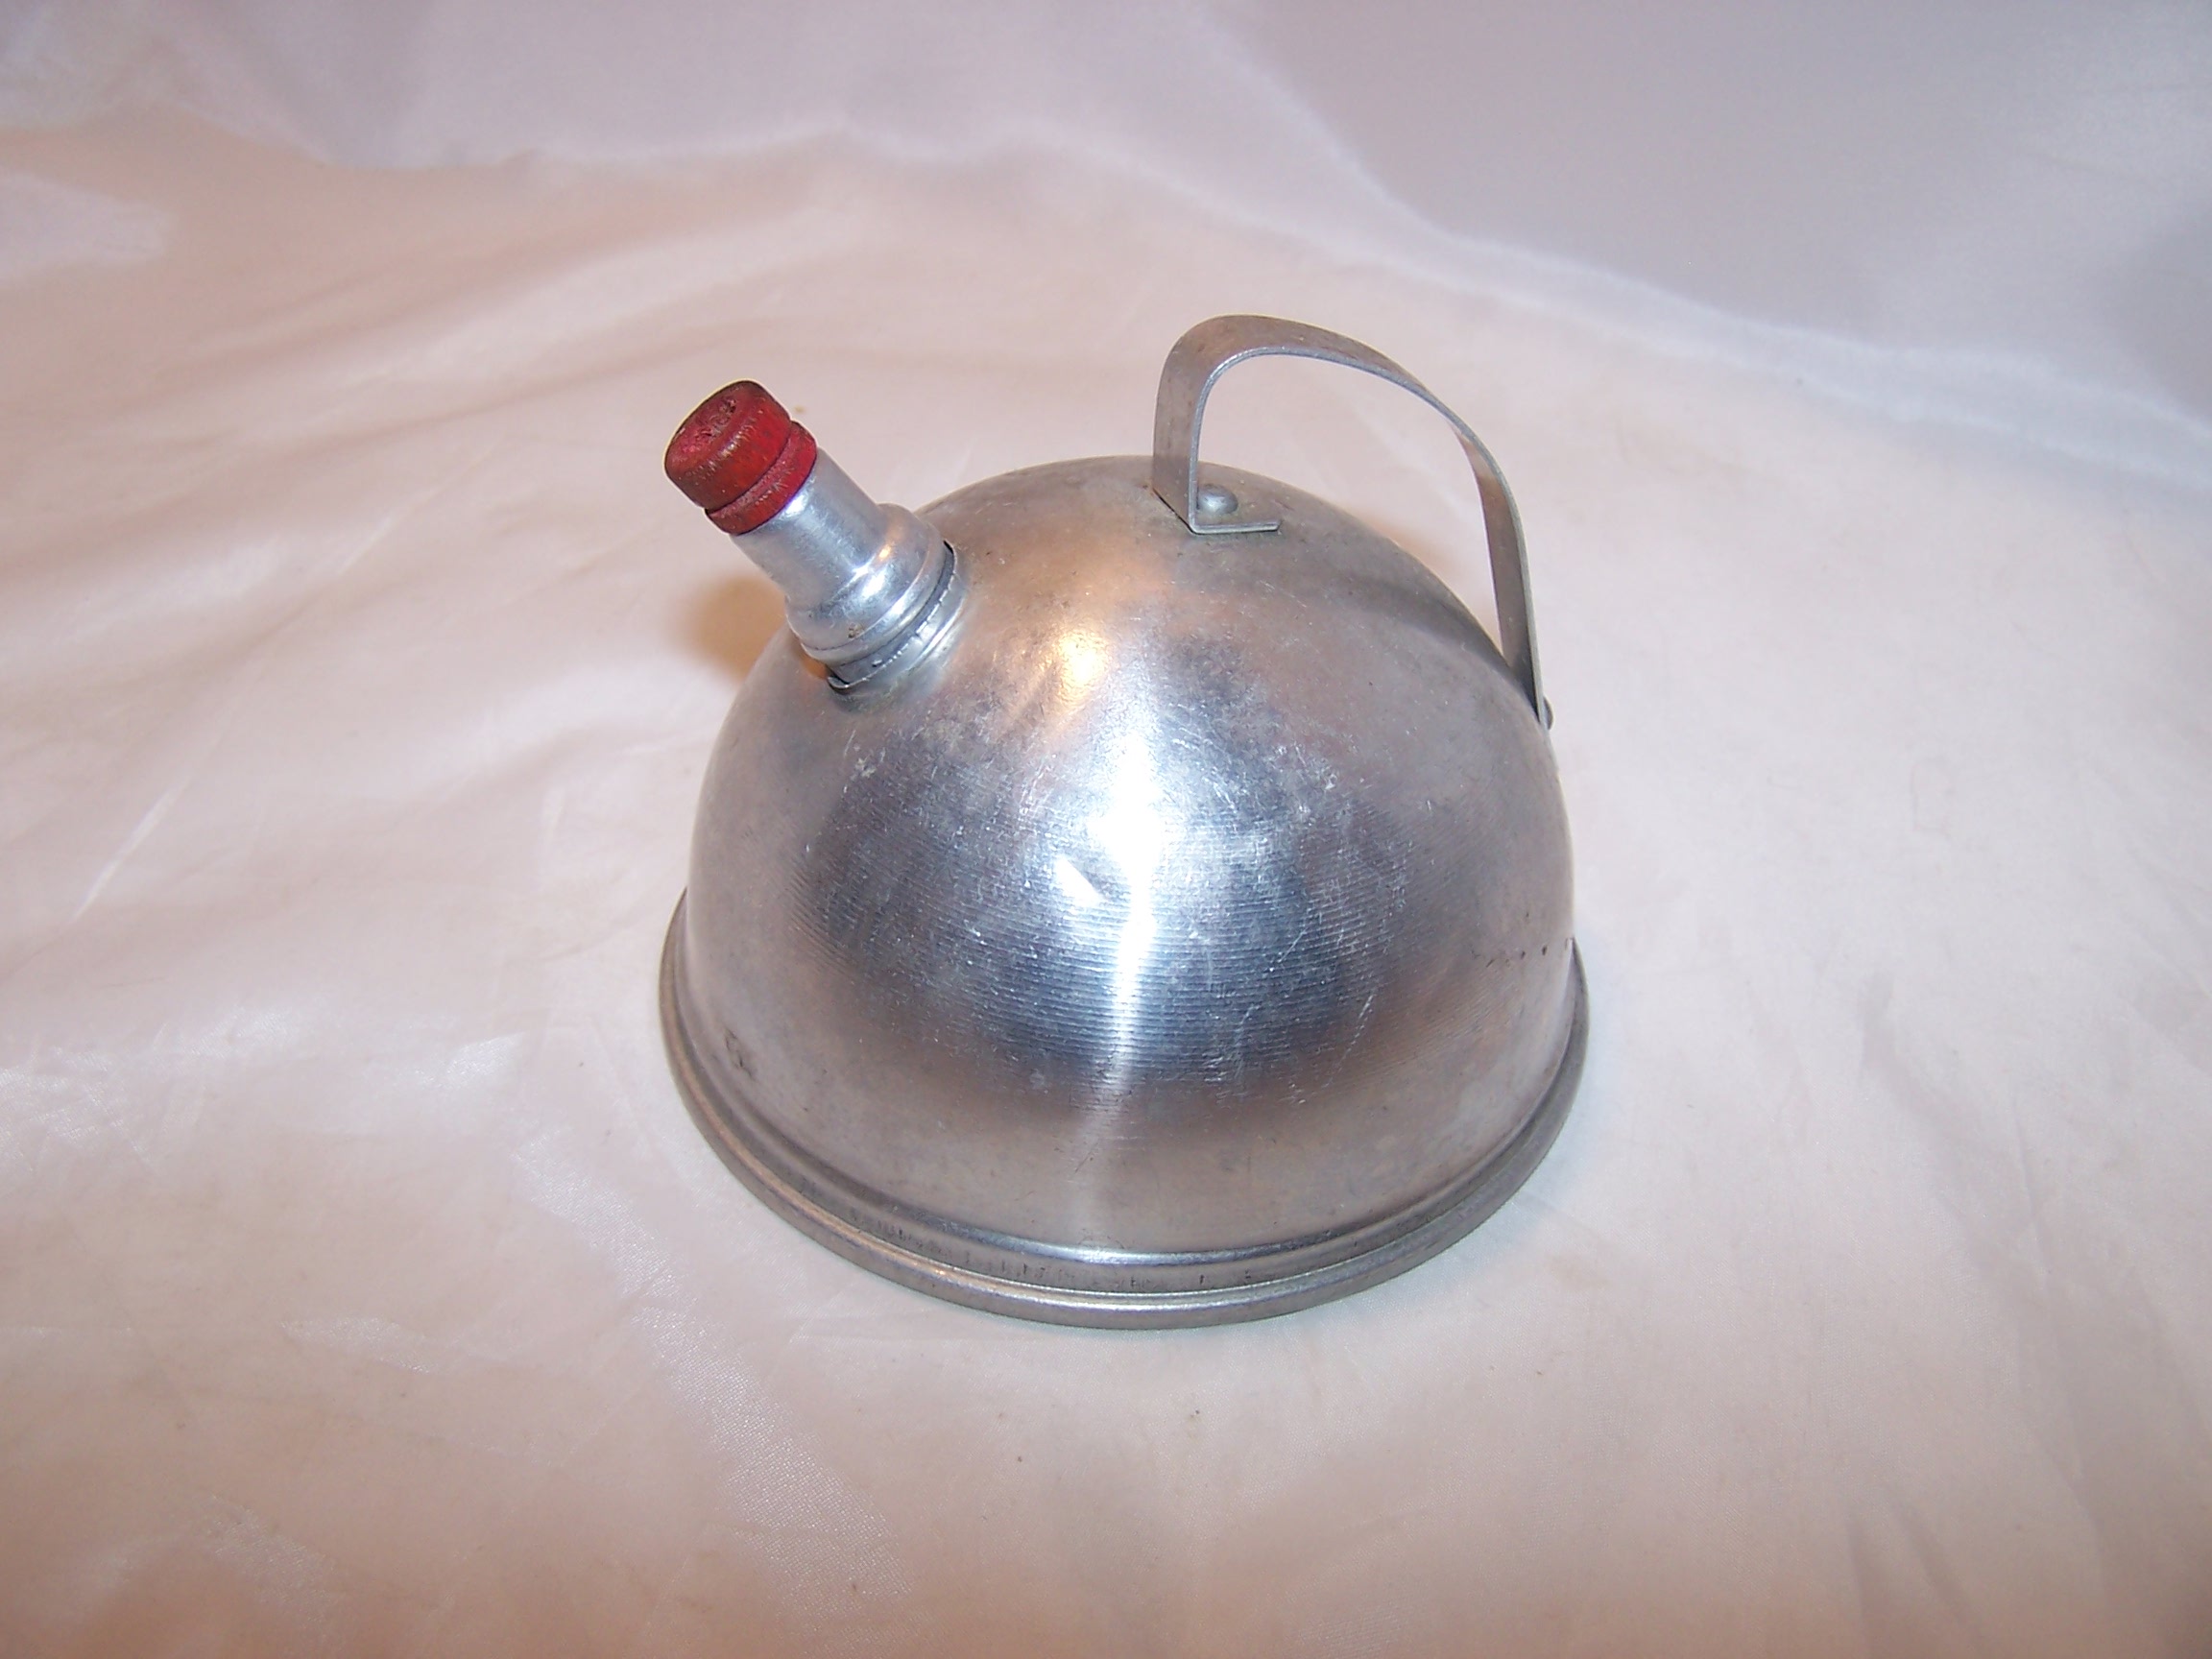 Child's Aluminum Teapot Toy